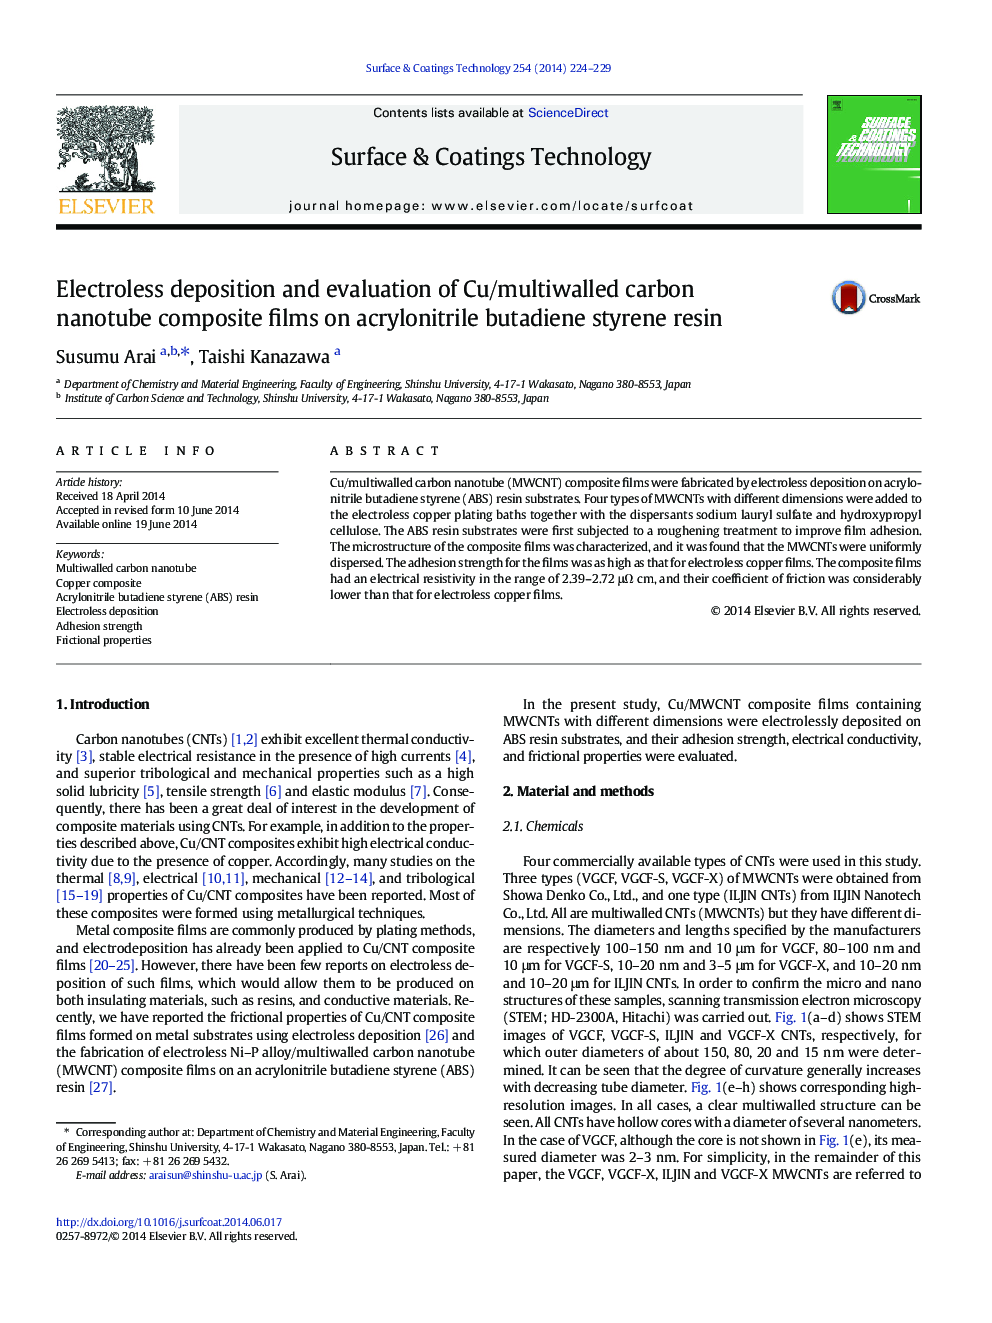 Electroless deposition and evaluation of Cu/multiwalled carbon nanotube composite films on acrylonitrile butadiene styrene resin